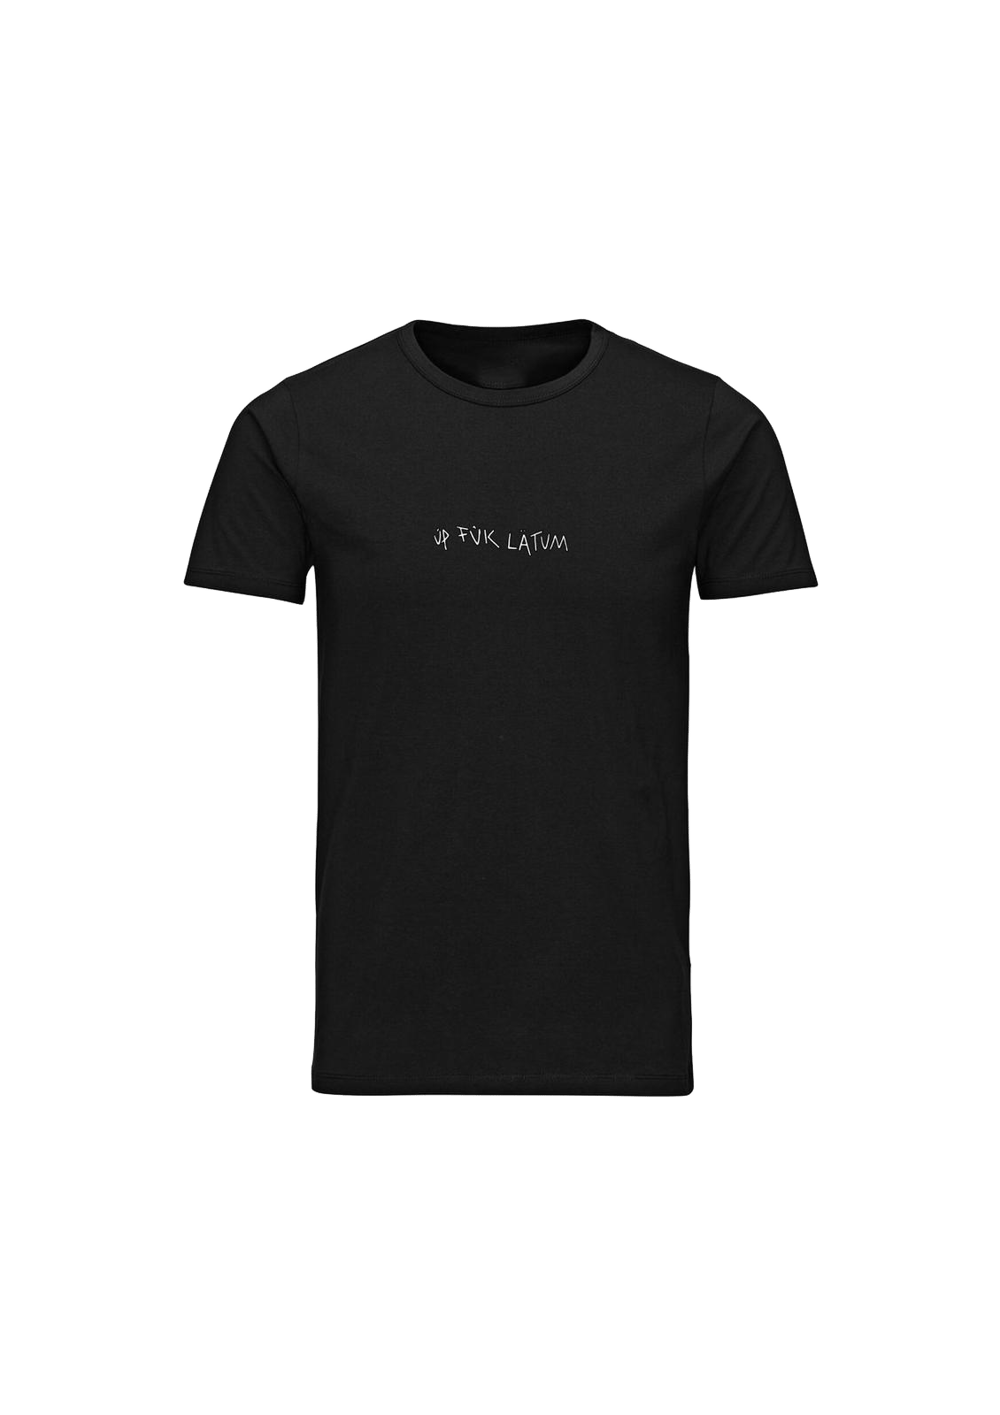 Image of Up FÜk Latum T-shirt (Black)